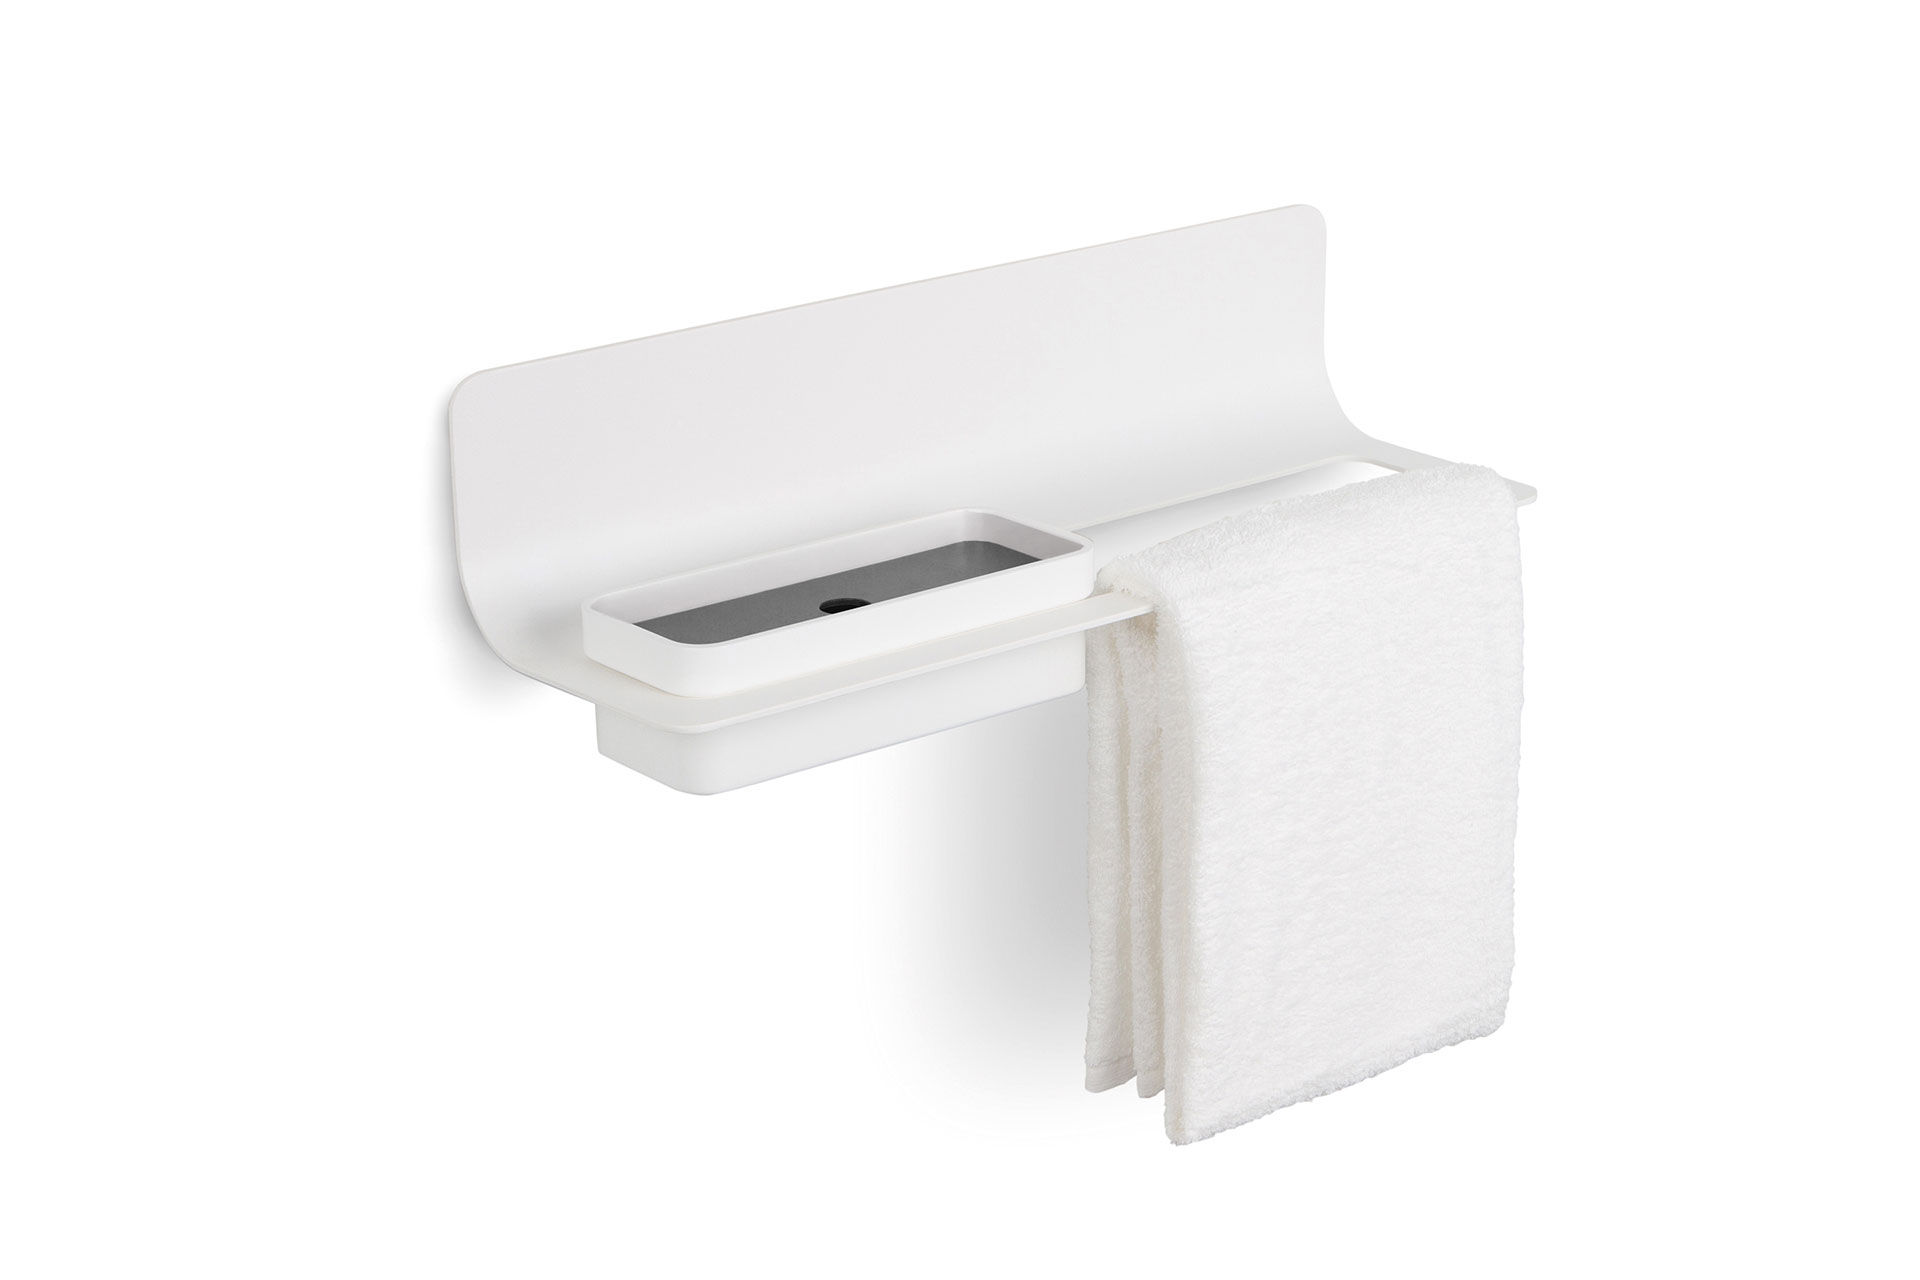 Towel holder - accessories bar 460 mm